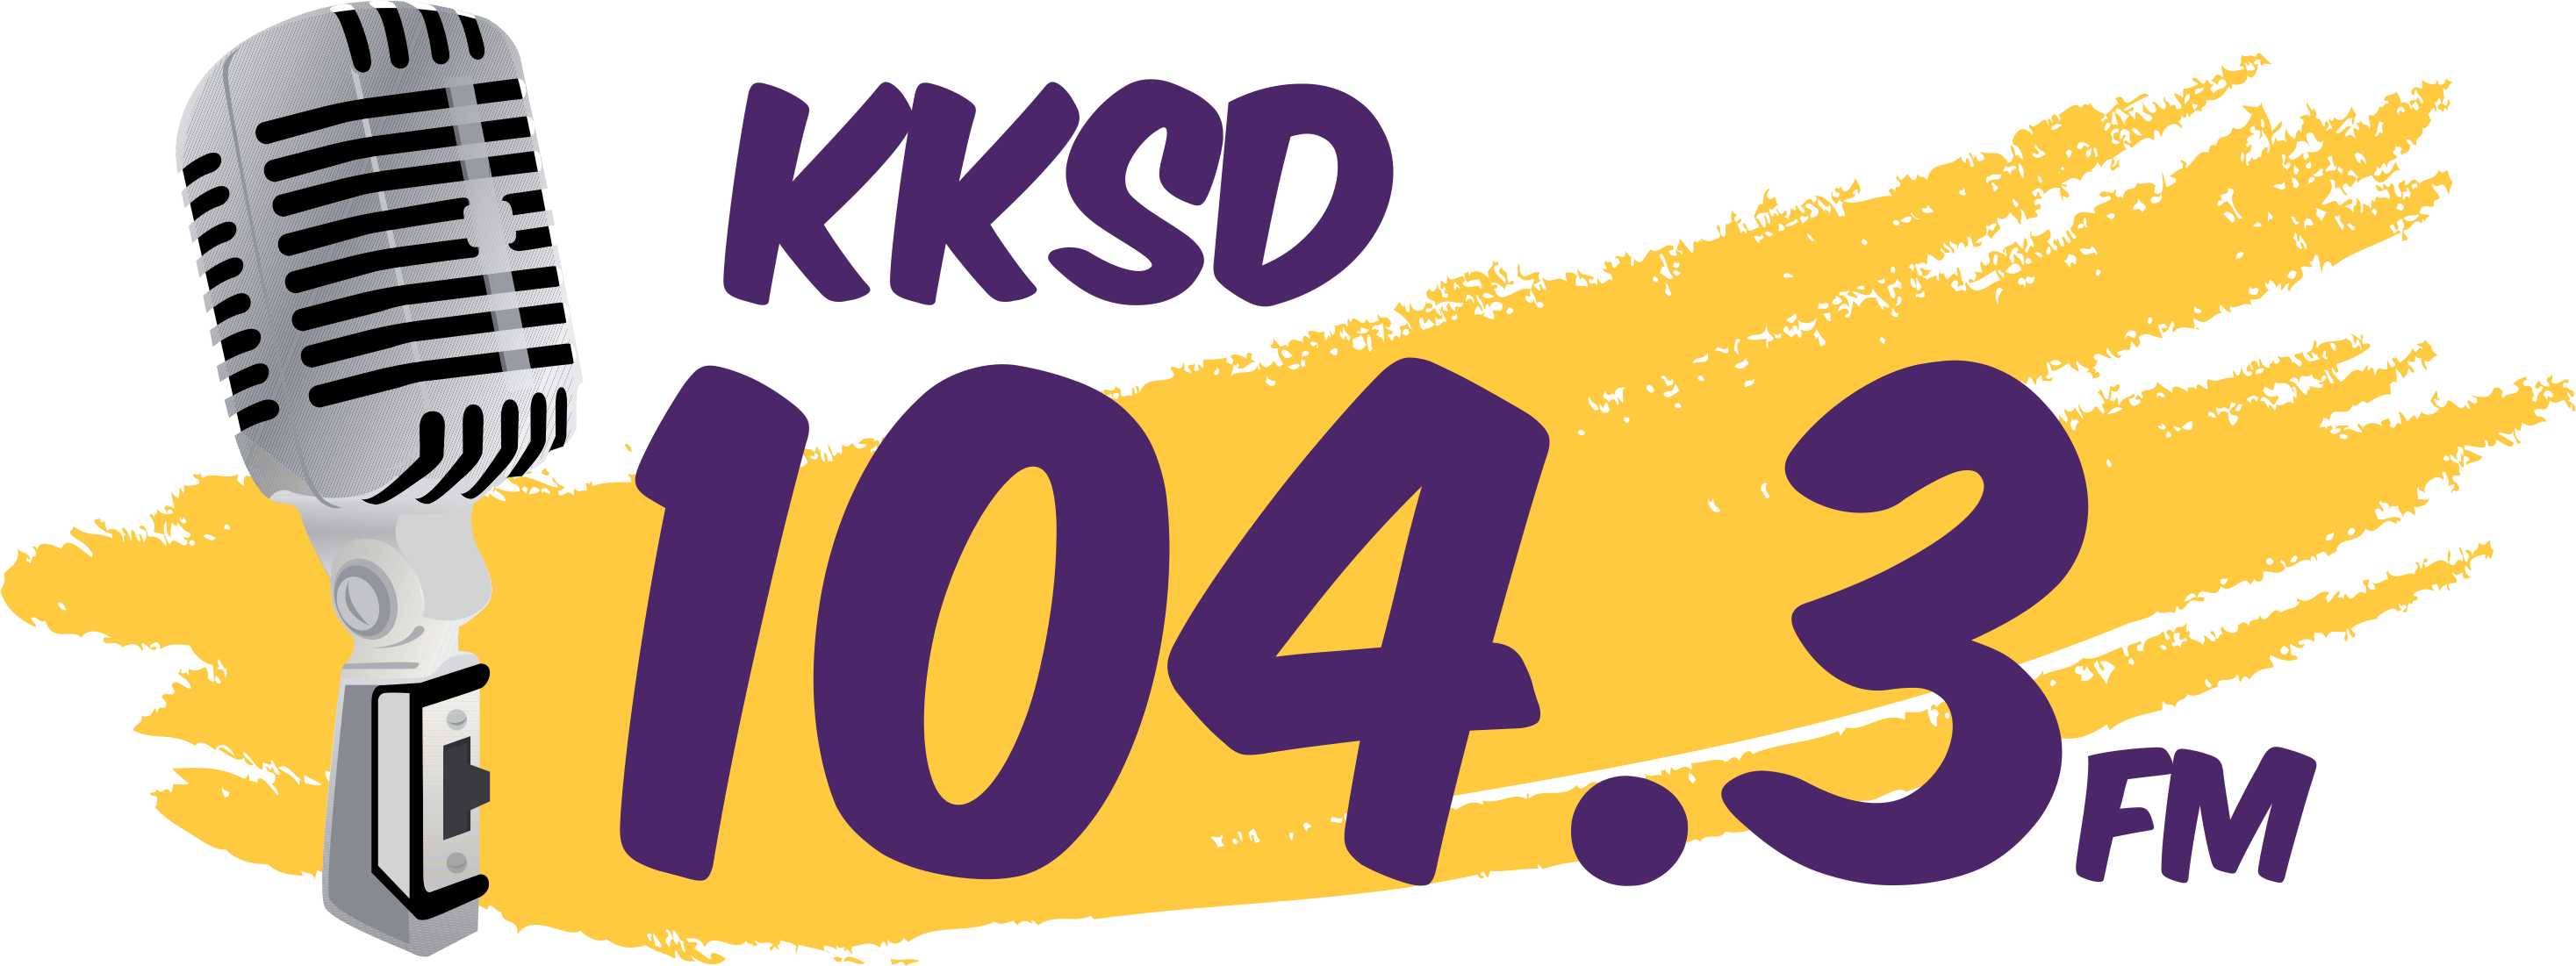 KKSD 104.3 logo